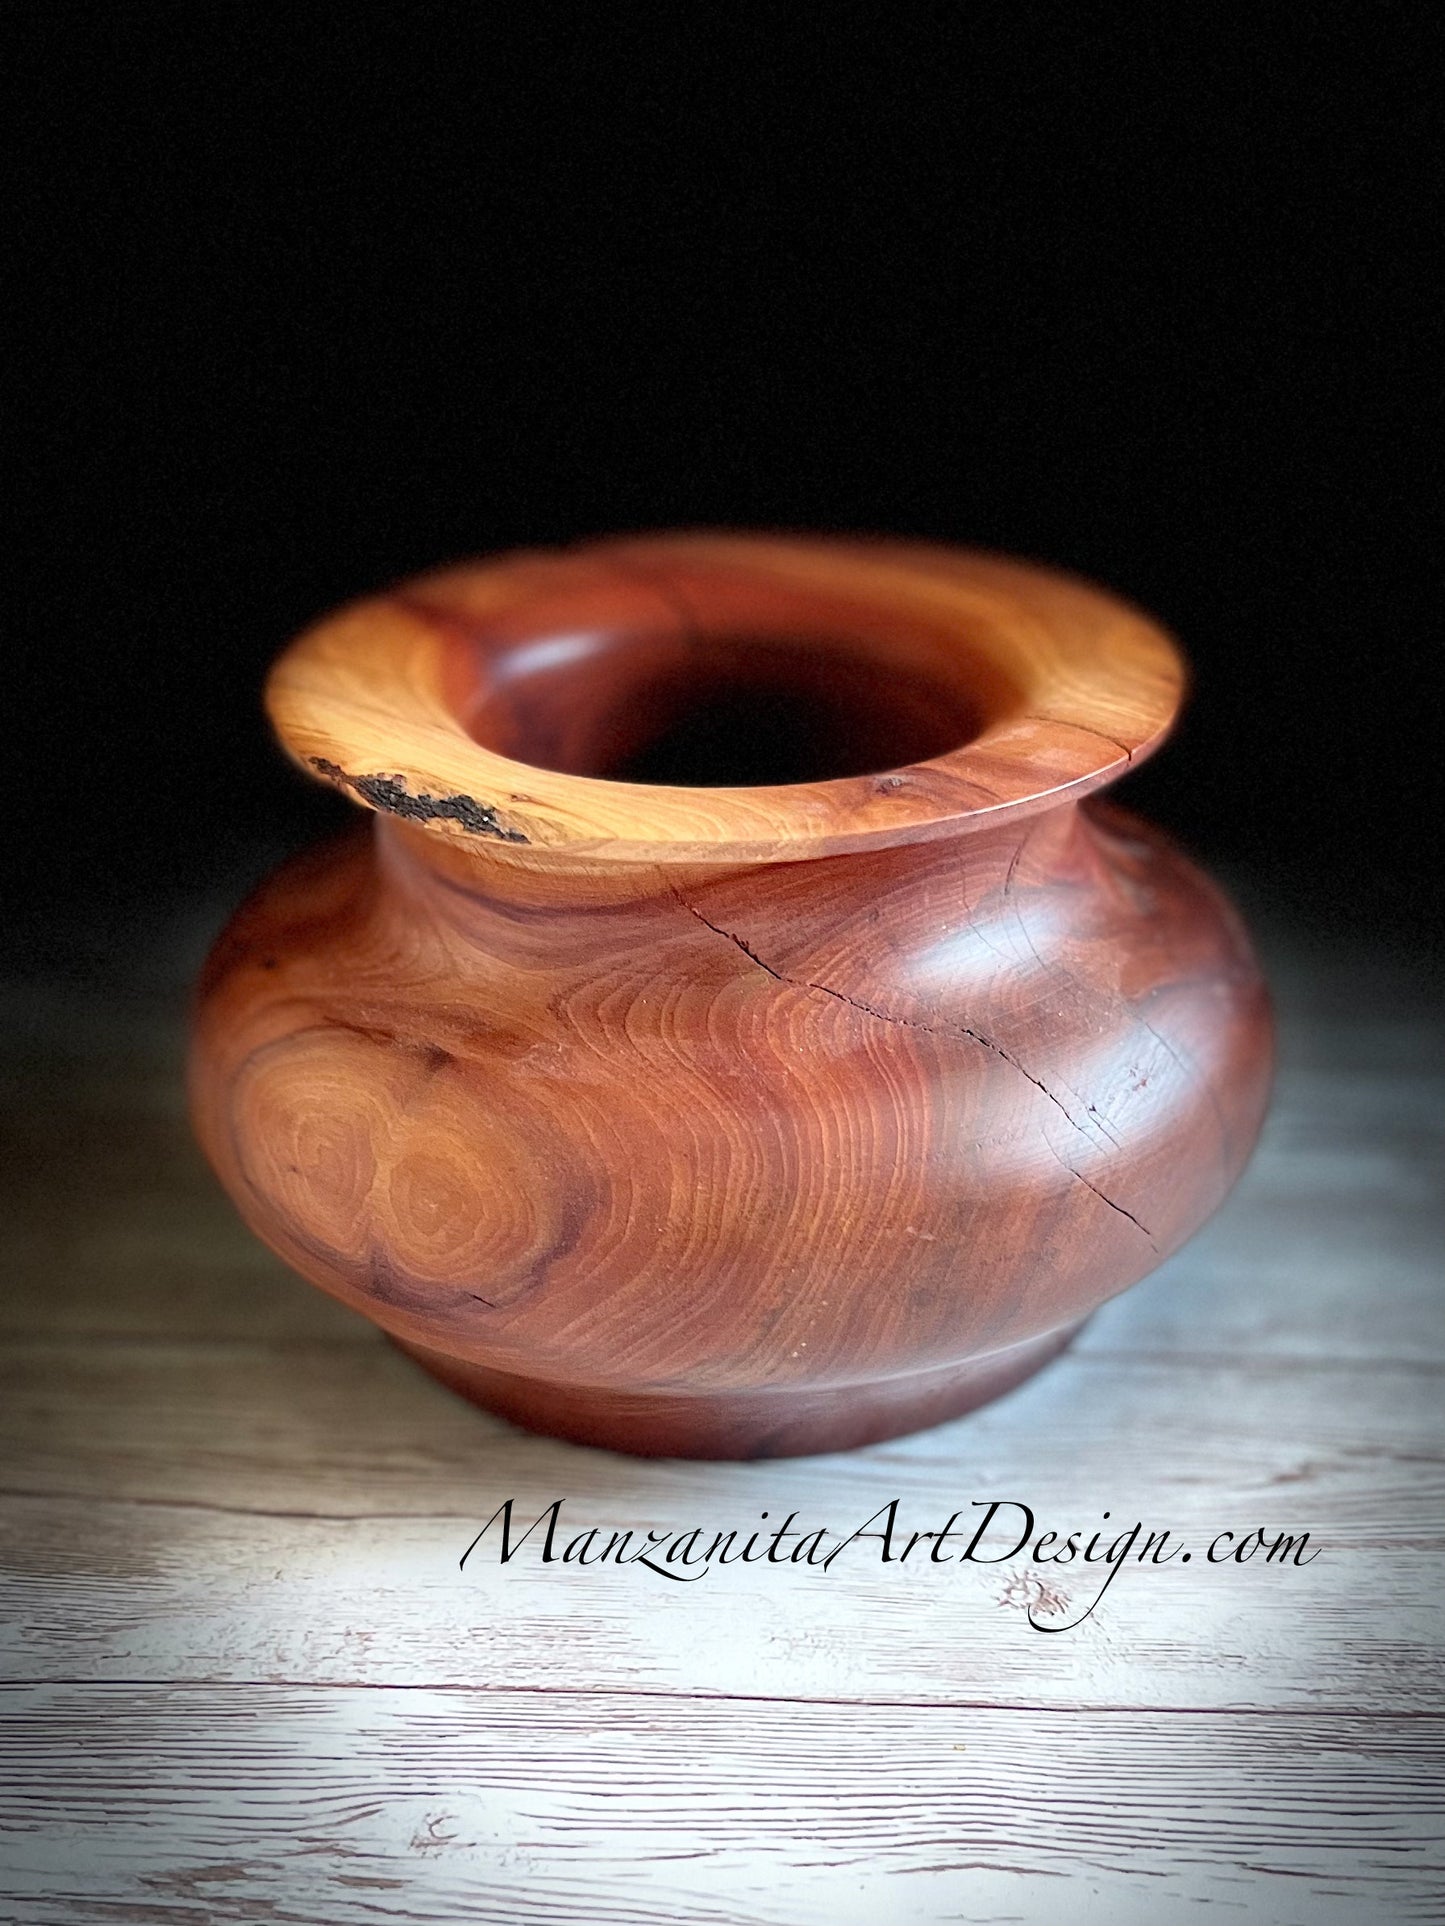 Manzanita Wood Decorative Vases. 3.25"H x 5.5" Dia